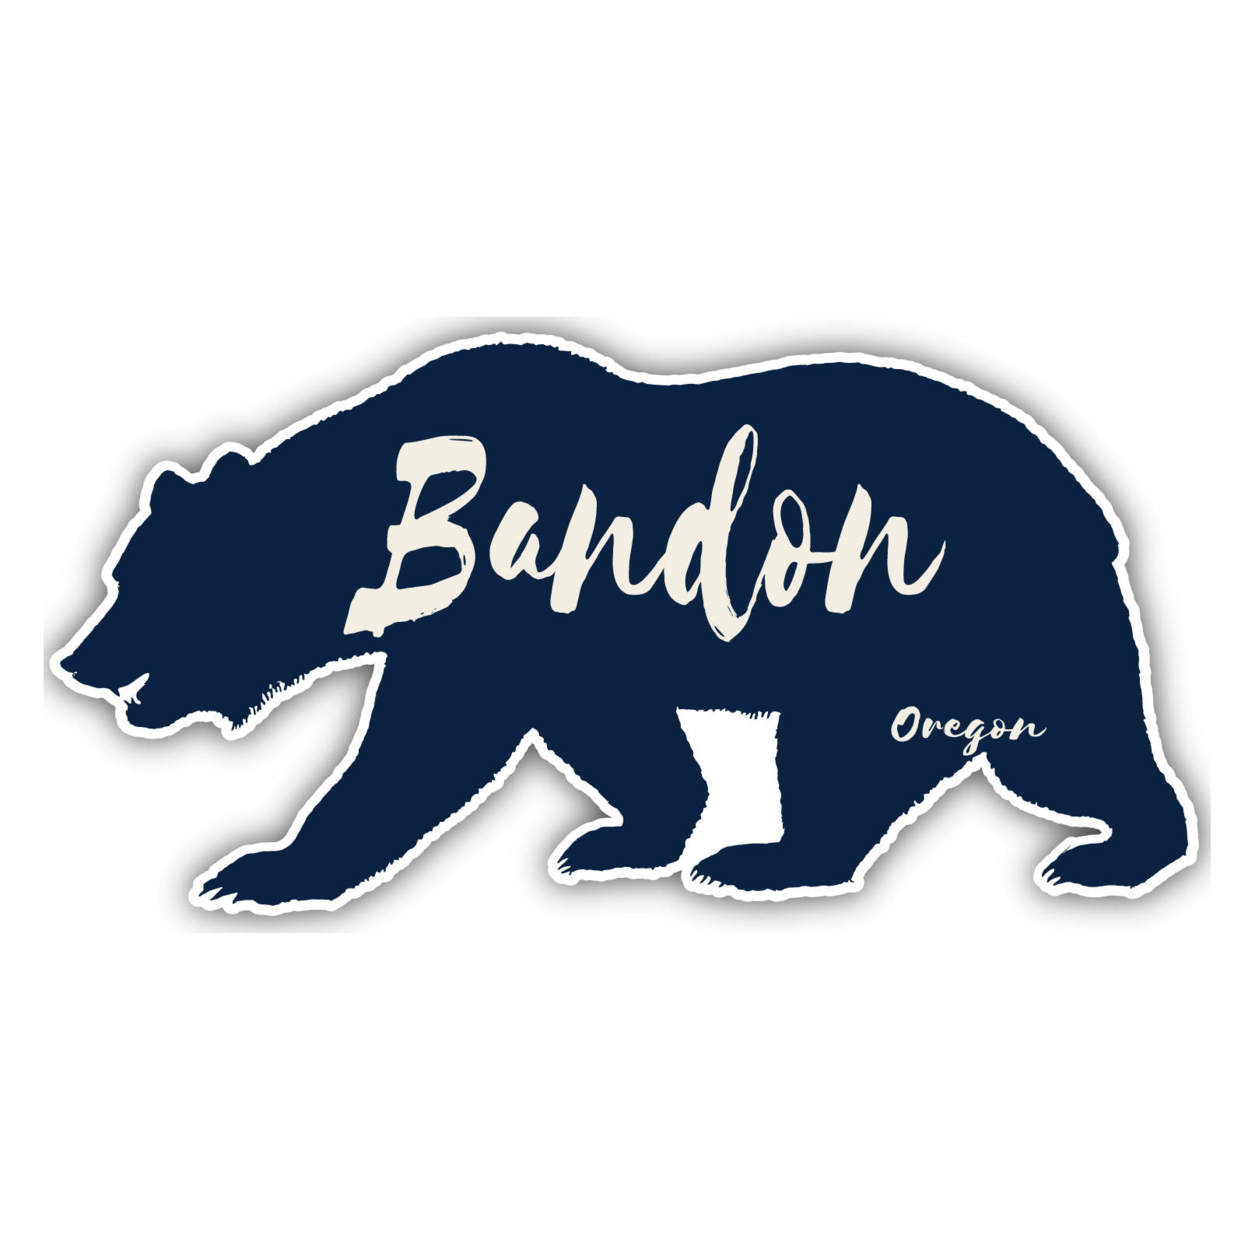 Bandon Oregon Souvenir Decorative Stickers (Choose Theme And Size) - Single Unit, 8-Inch, Bear